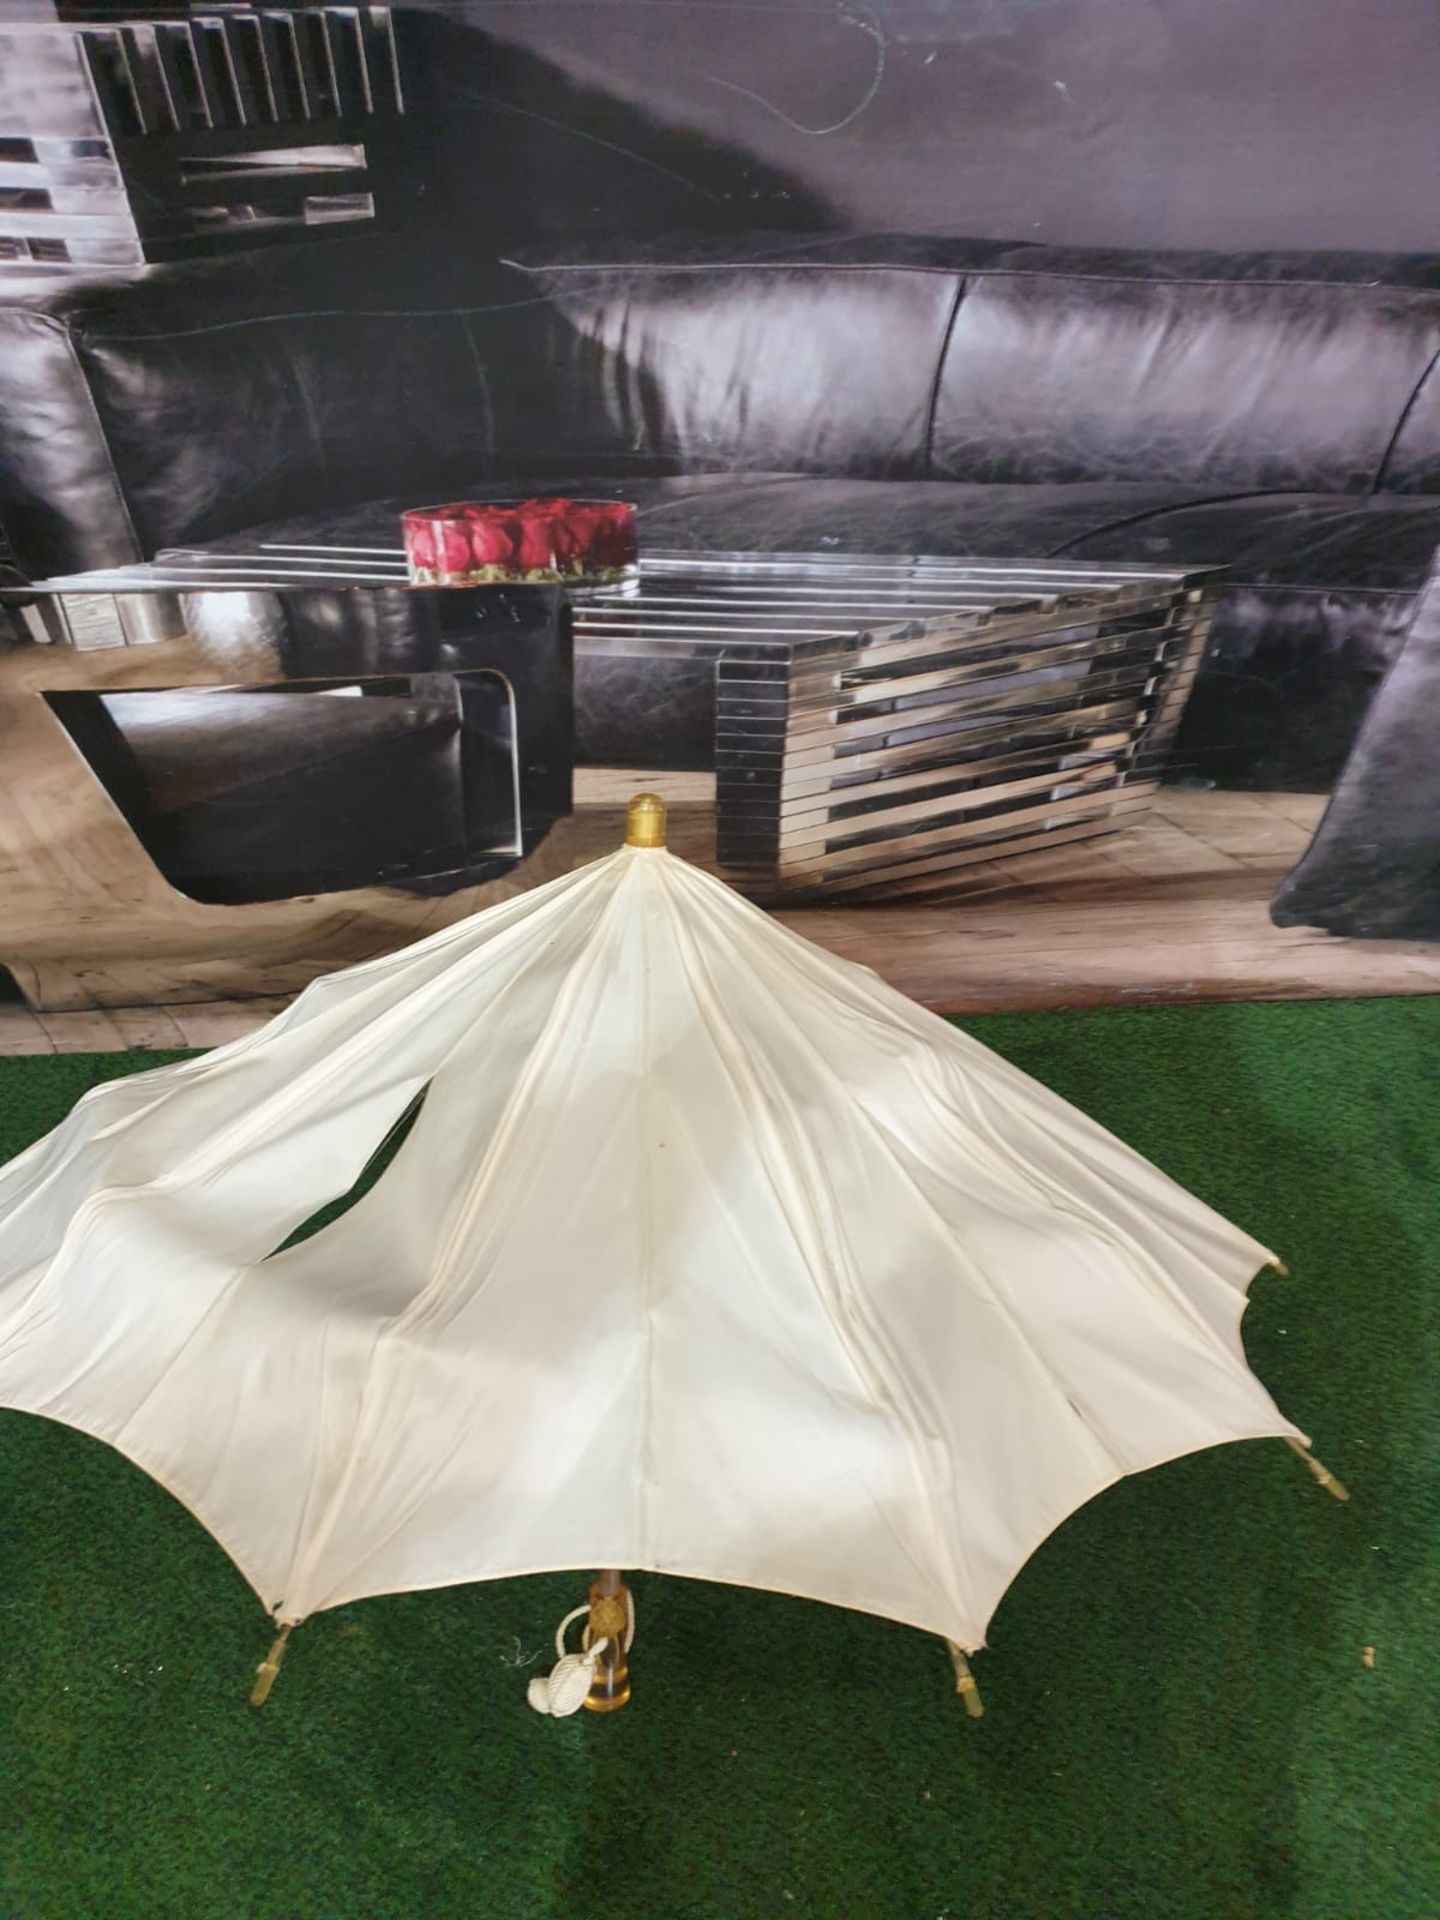 Ladies parasol Cream silk-like material - Yellow handle. Needs T.L.C. - Image 3 of 4